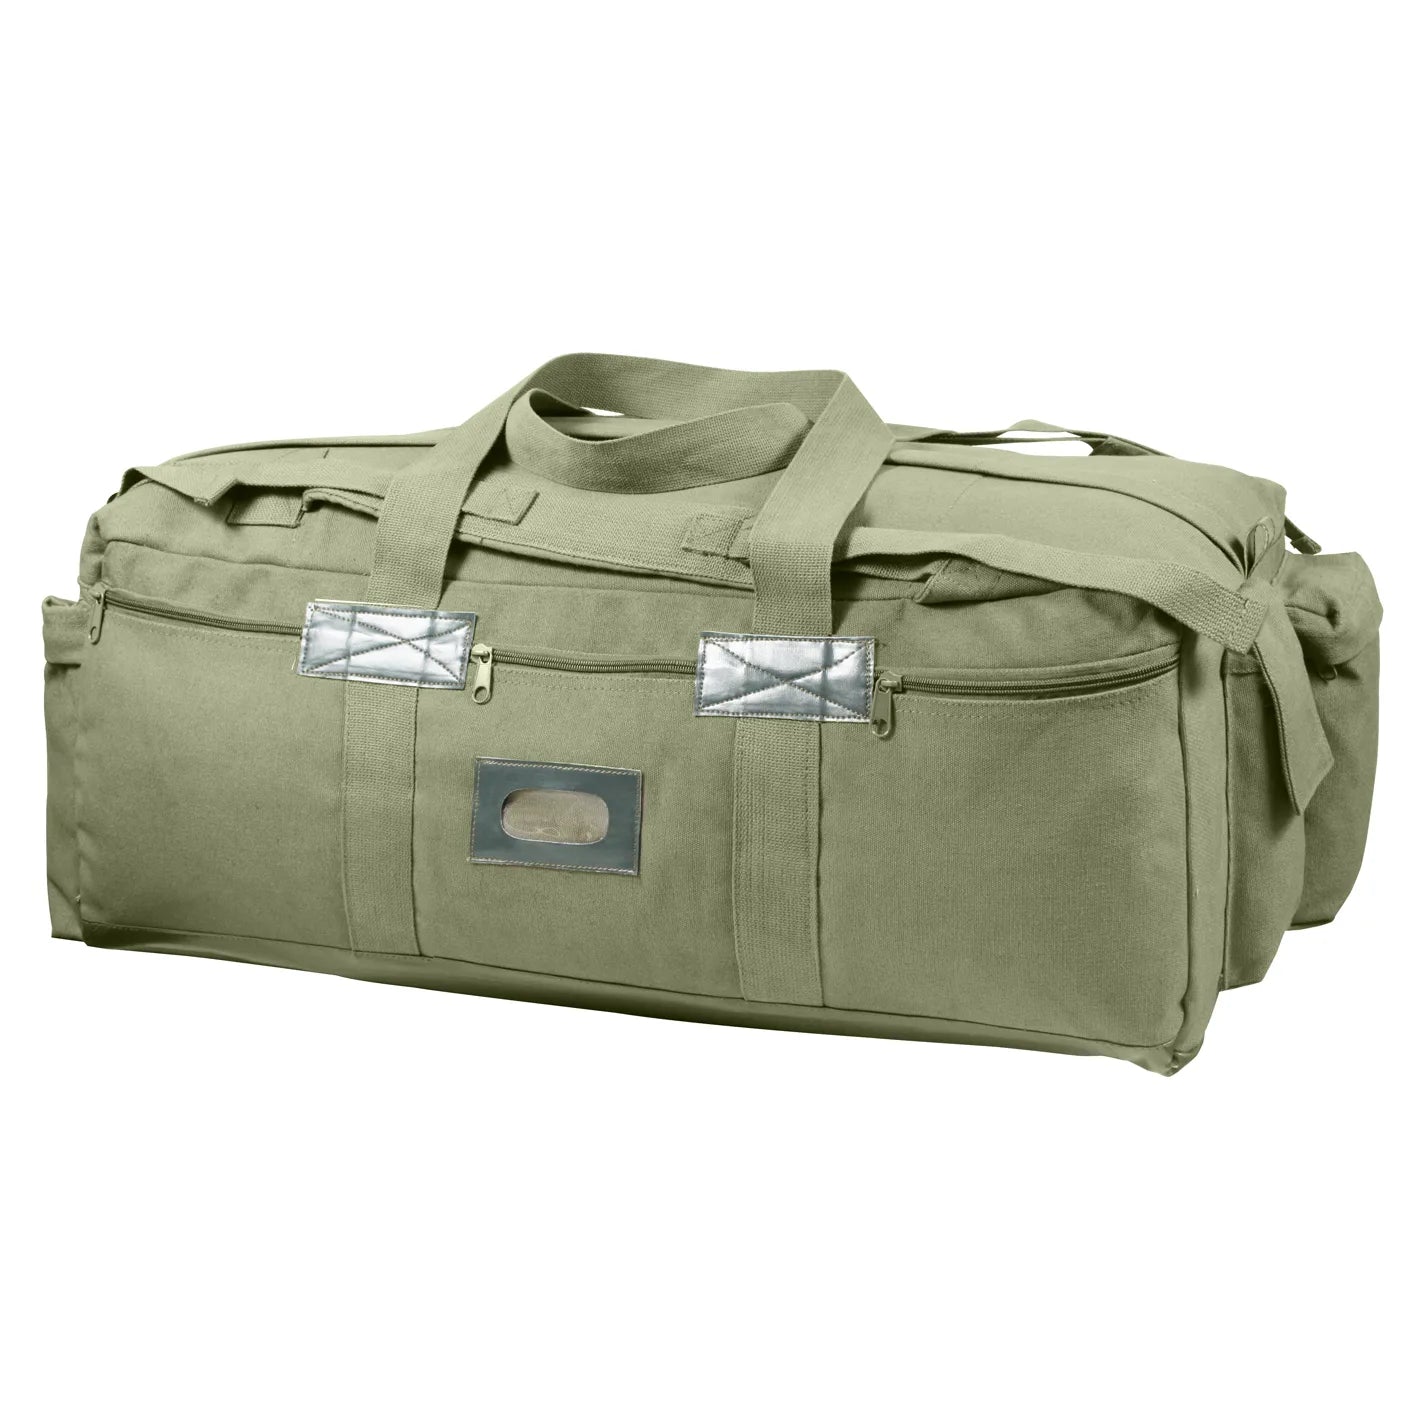 Mossad Tactical Duffle Bag - 34" x 15" x 12"